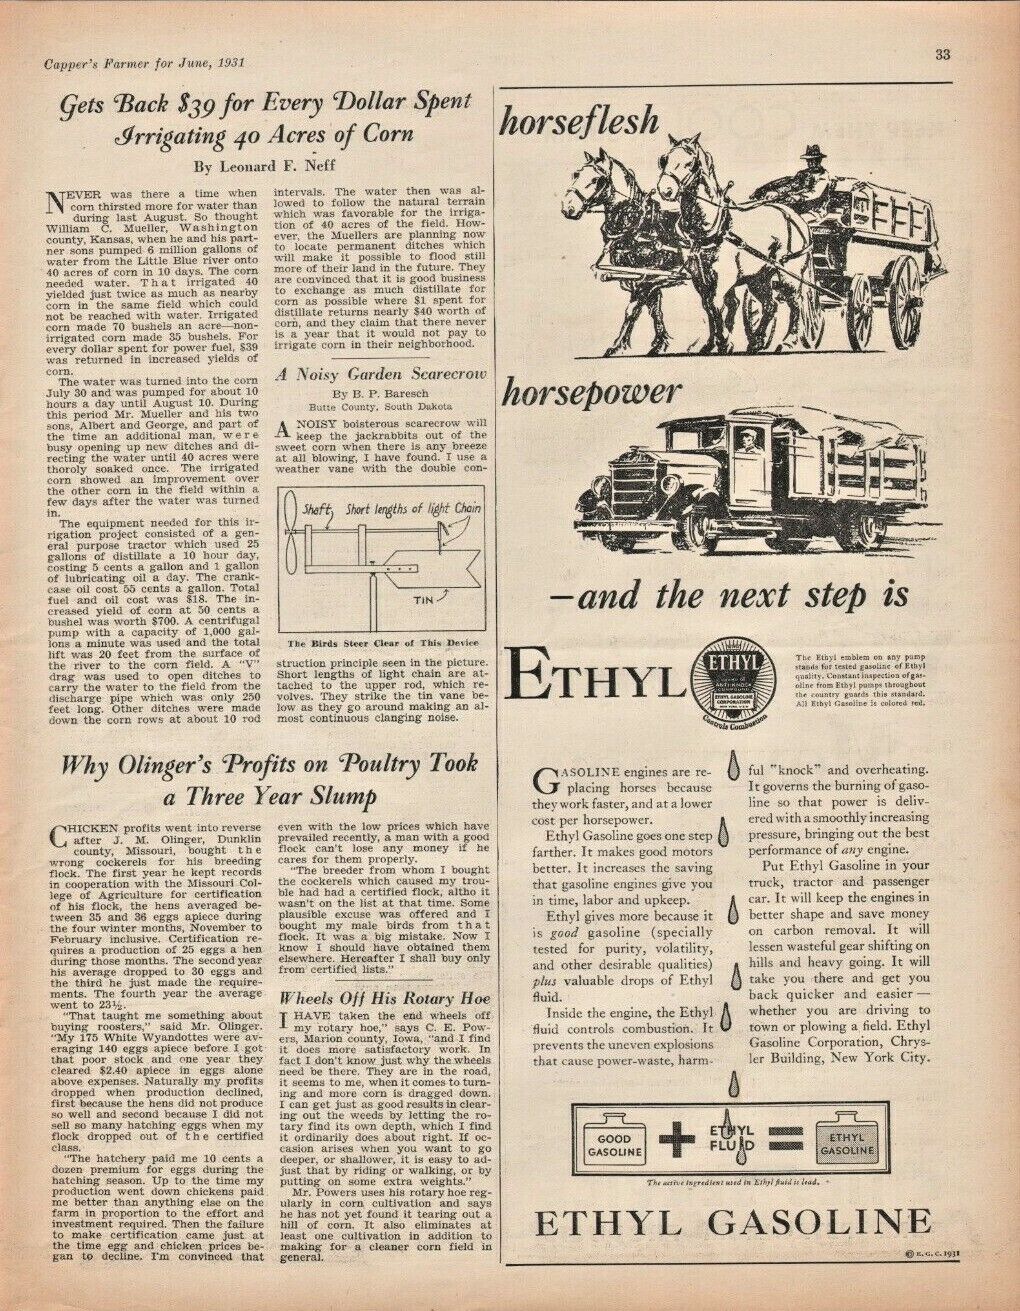 1931 Ethyl Gasoline Corporation Chrysler Building New York City - Vintage Ad